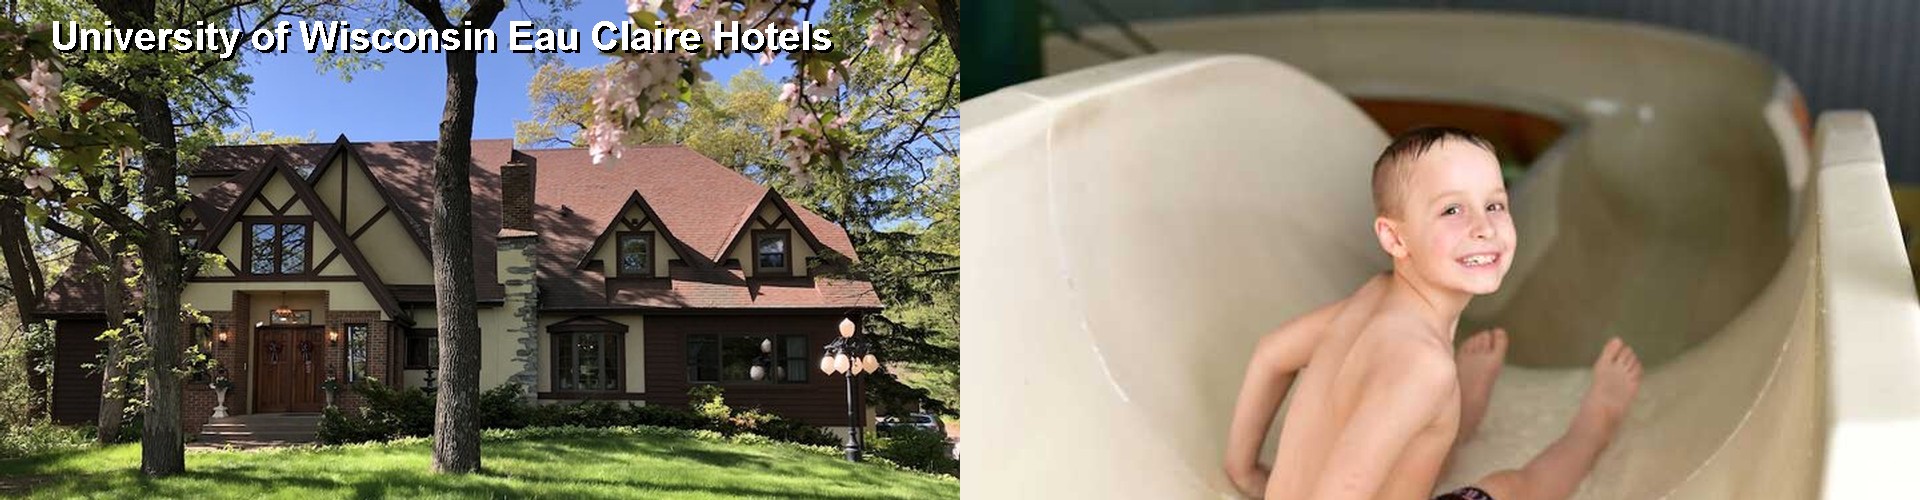 3 Best Hotels near University of Wisconsin Eau Claire